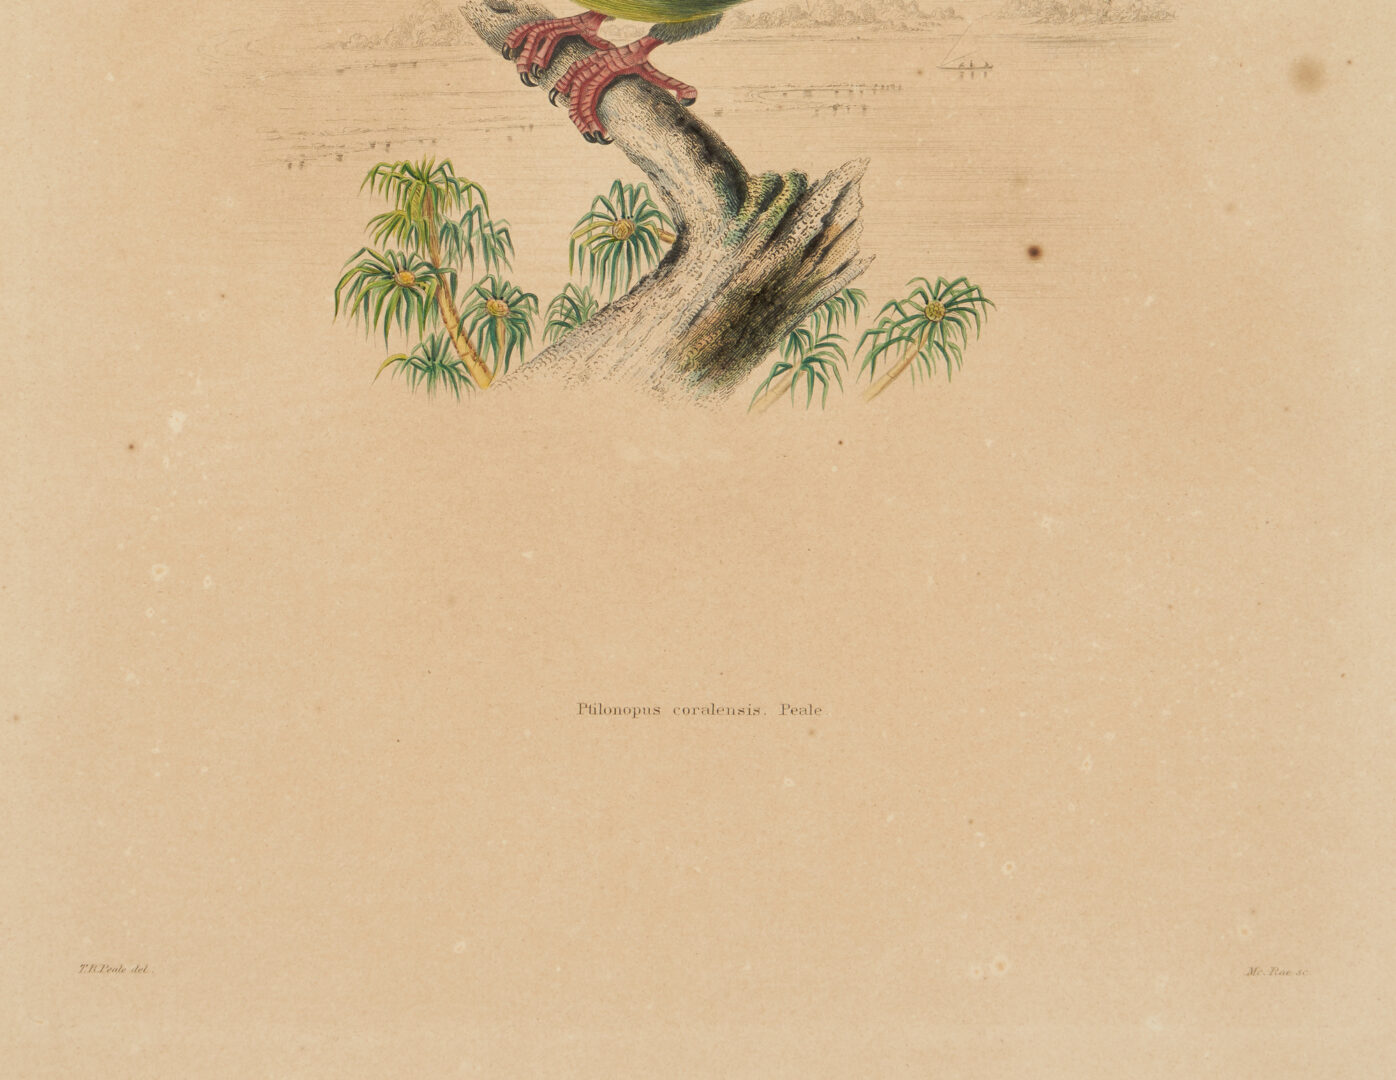 Lot 713: 4 Rare Early Bird Prints from John Cassin's Mammalogy and Ornithology